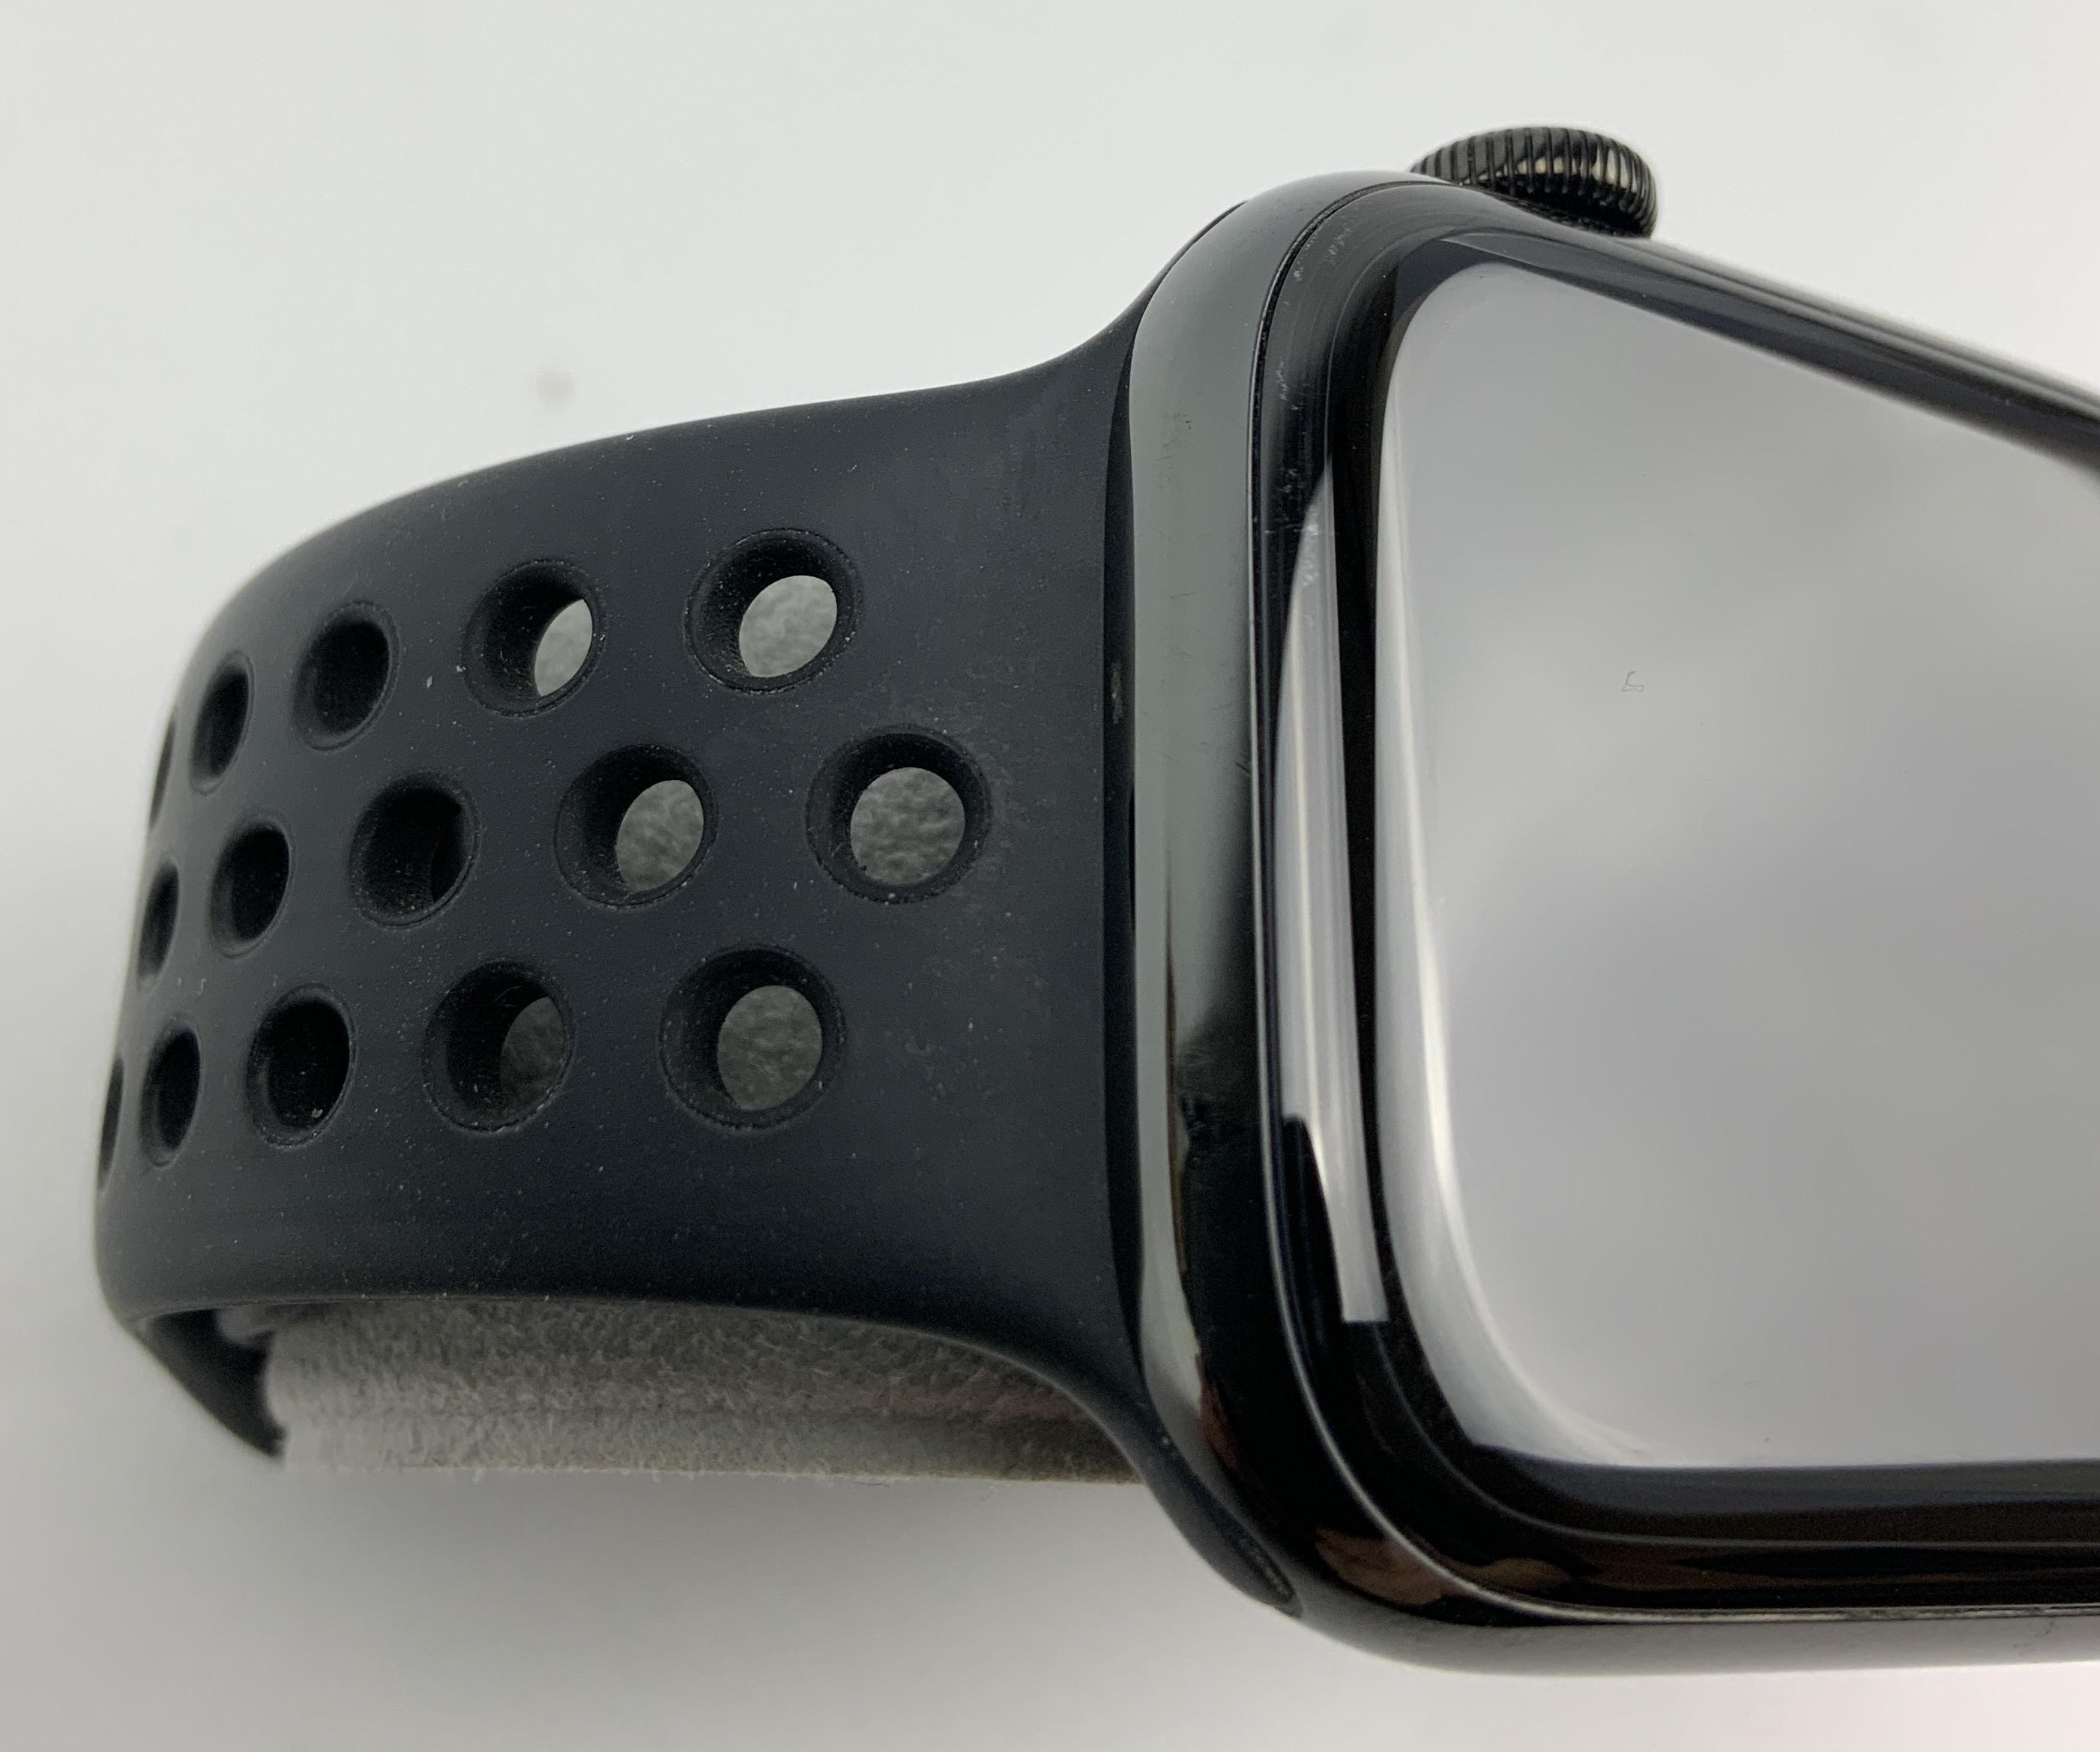 Watch Series 5 Steel Cellular (44mm), Space Black, immagine 2